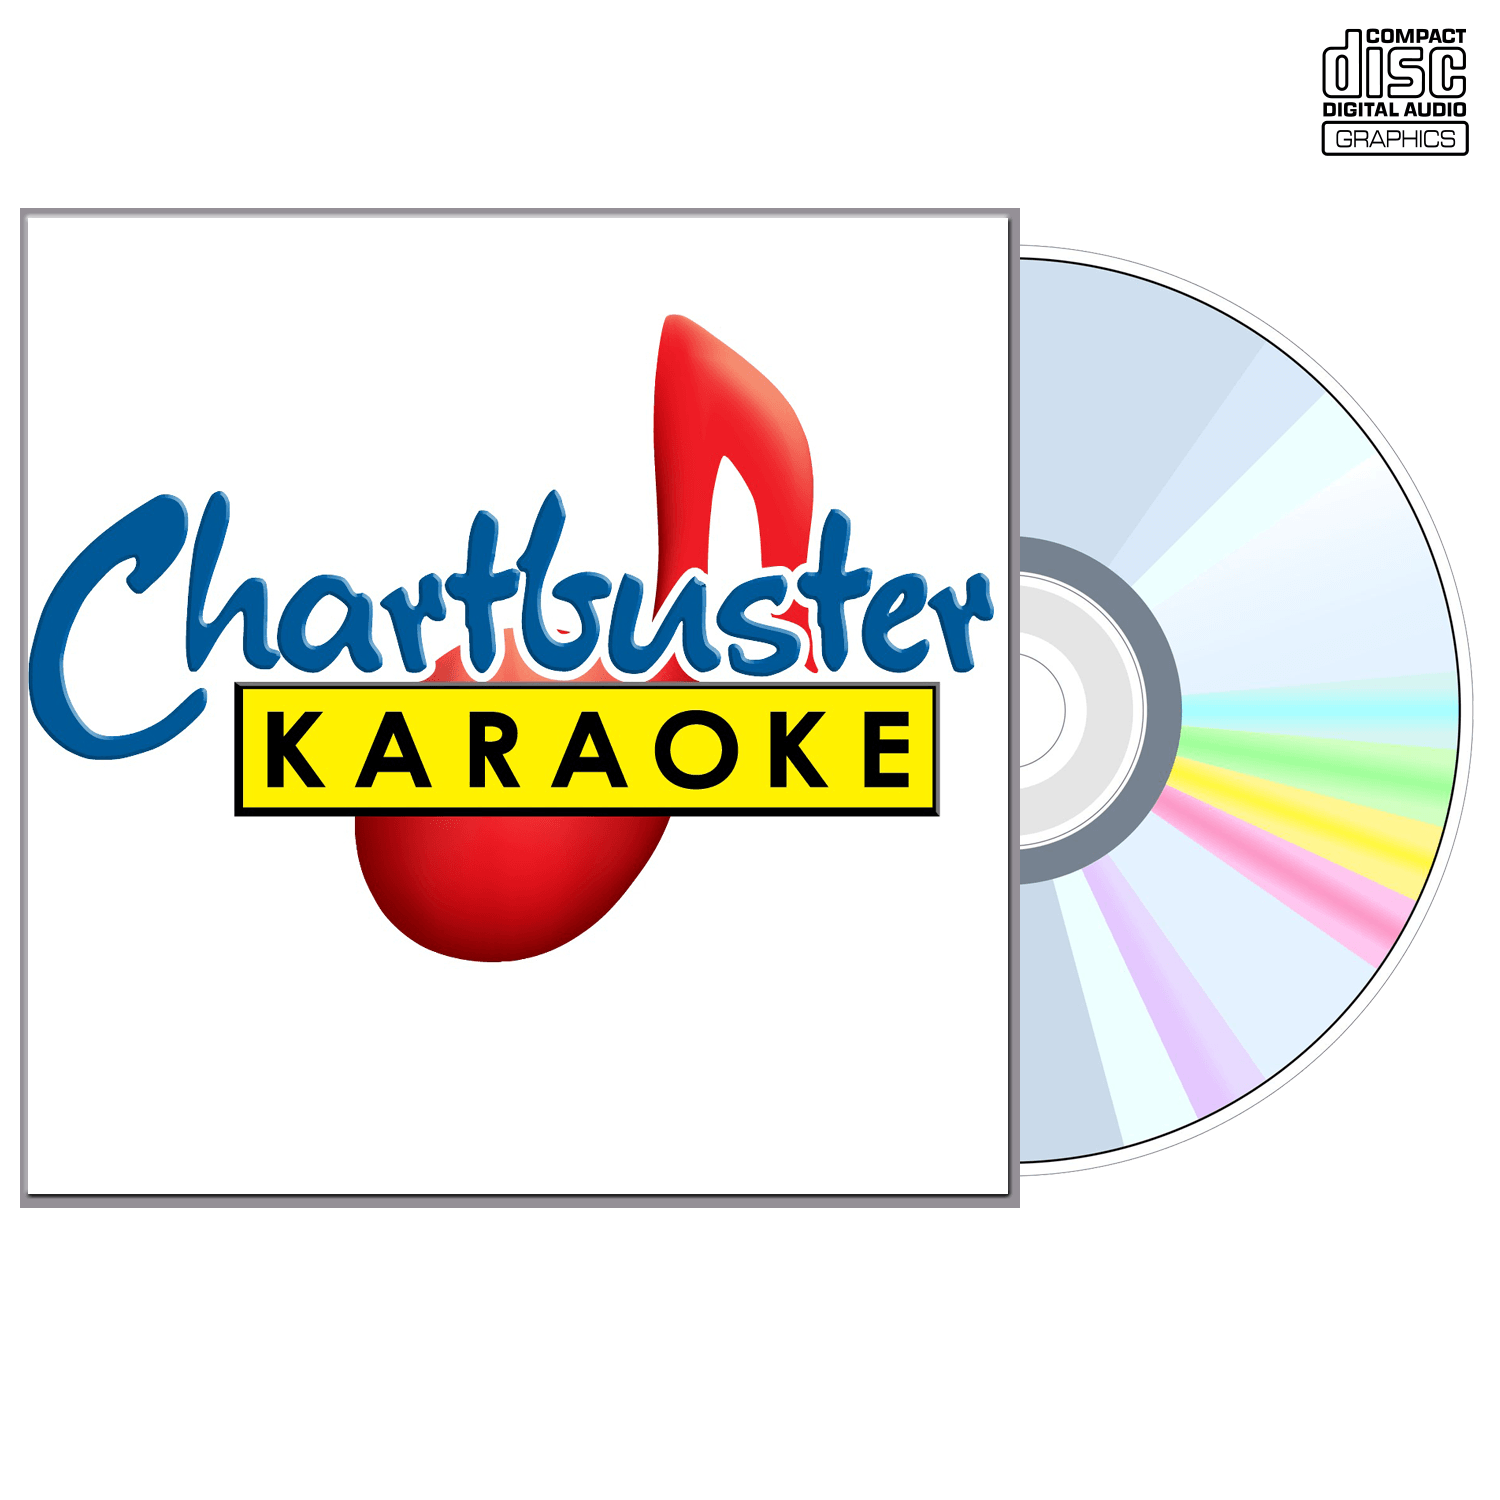 Chad Brock - CD+G - Chartbuster Karaoke - Karaoke Home Entertainment